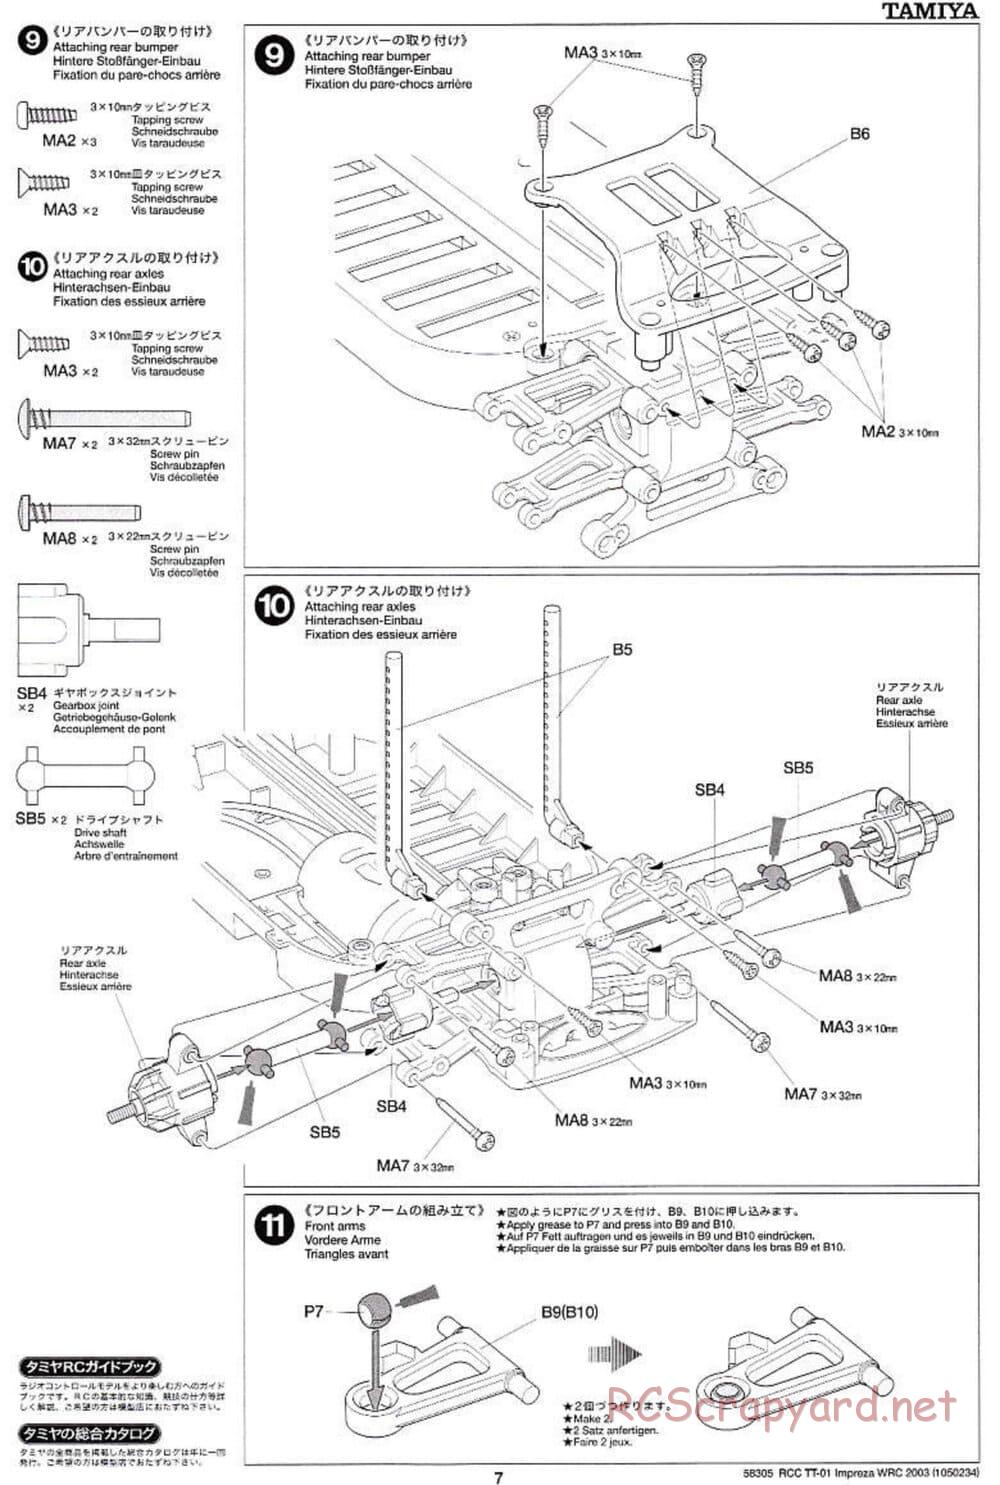 Tamiya - Subaru Impreza WRC 2003 - TT-01 Chassis - Manual - Page 7